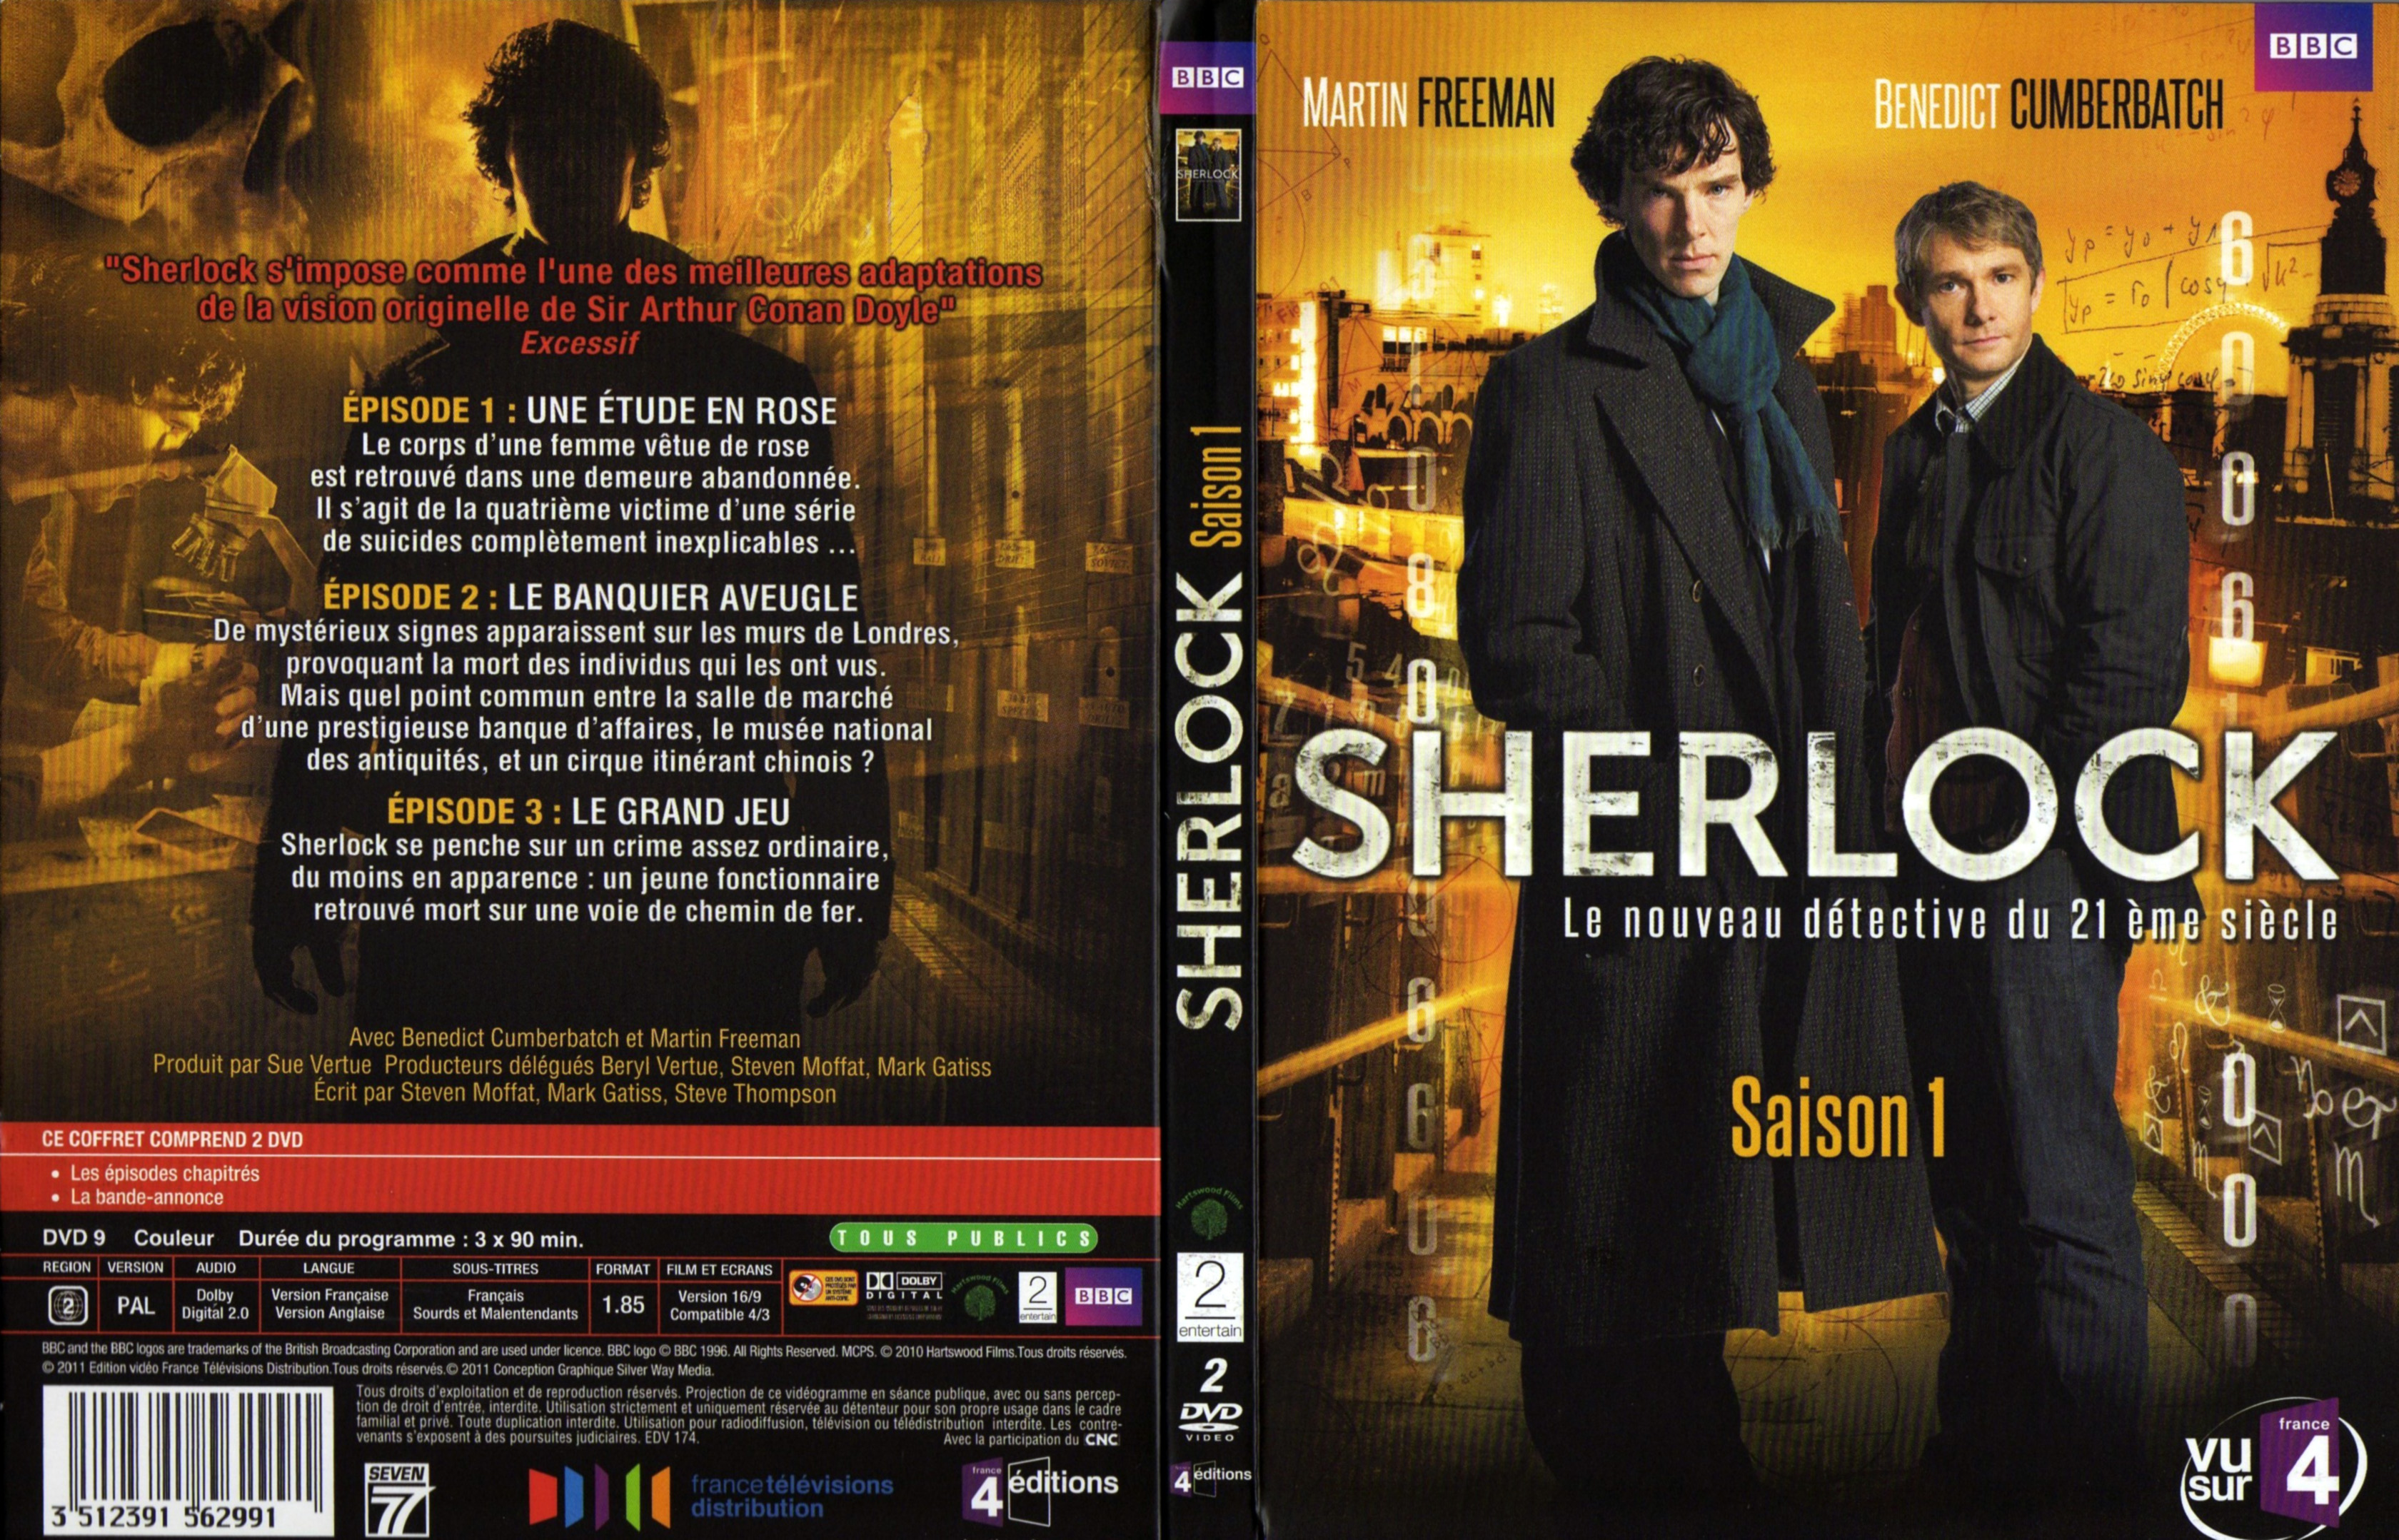 Jaquette DVD Sherlock Saison 1 COFFRET